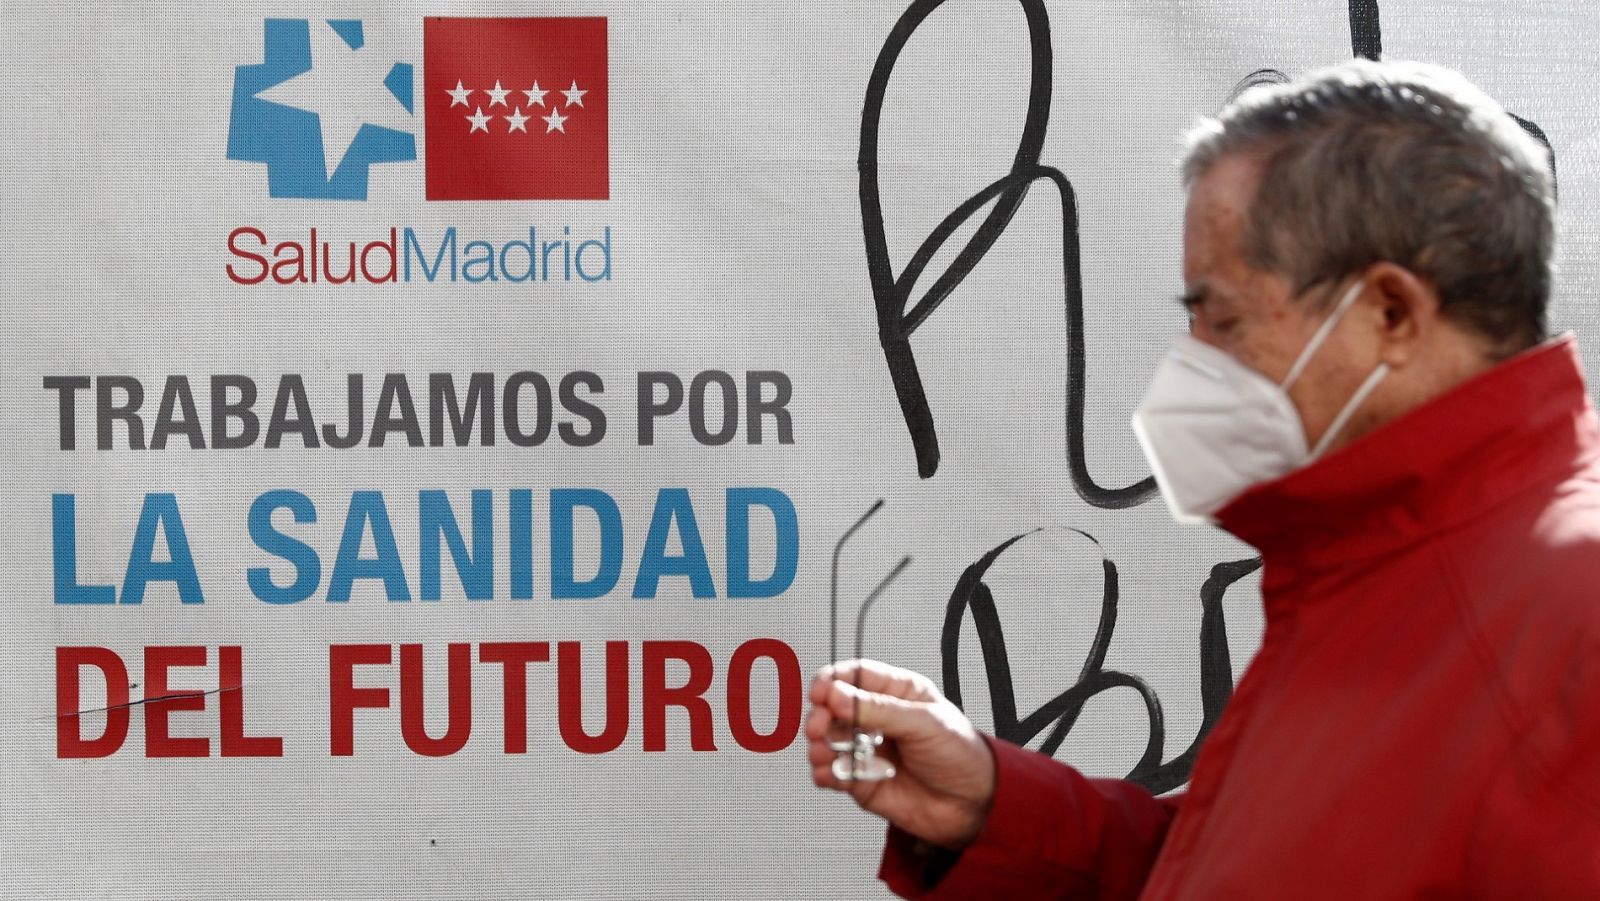 Coronavirus: Madrid hará test masivos a jóvenes tras la Navidad